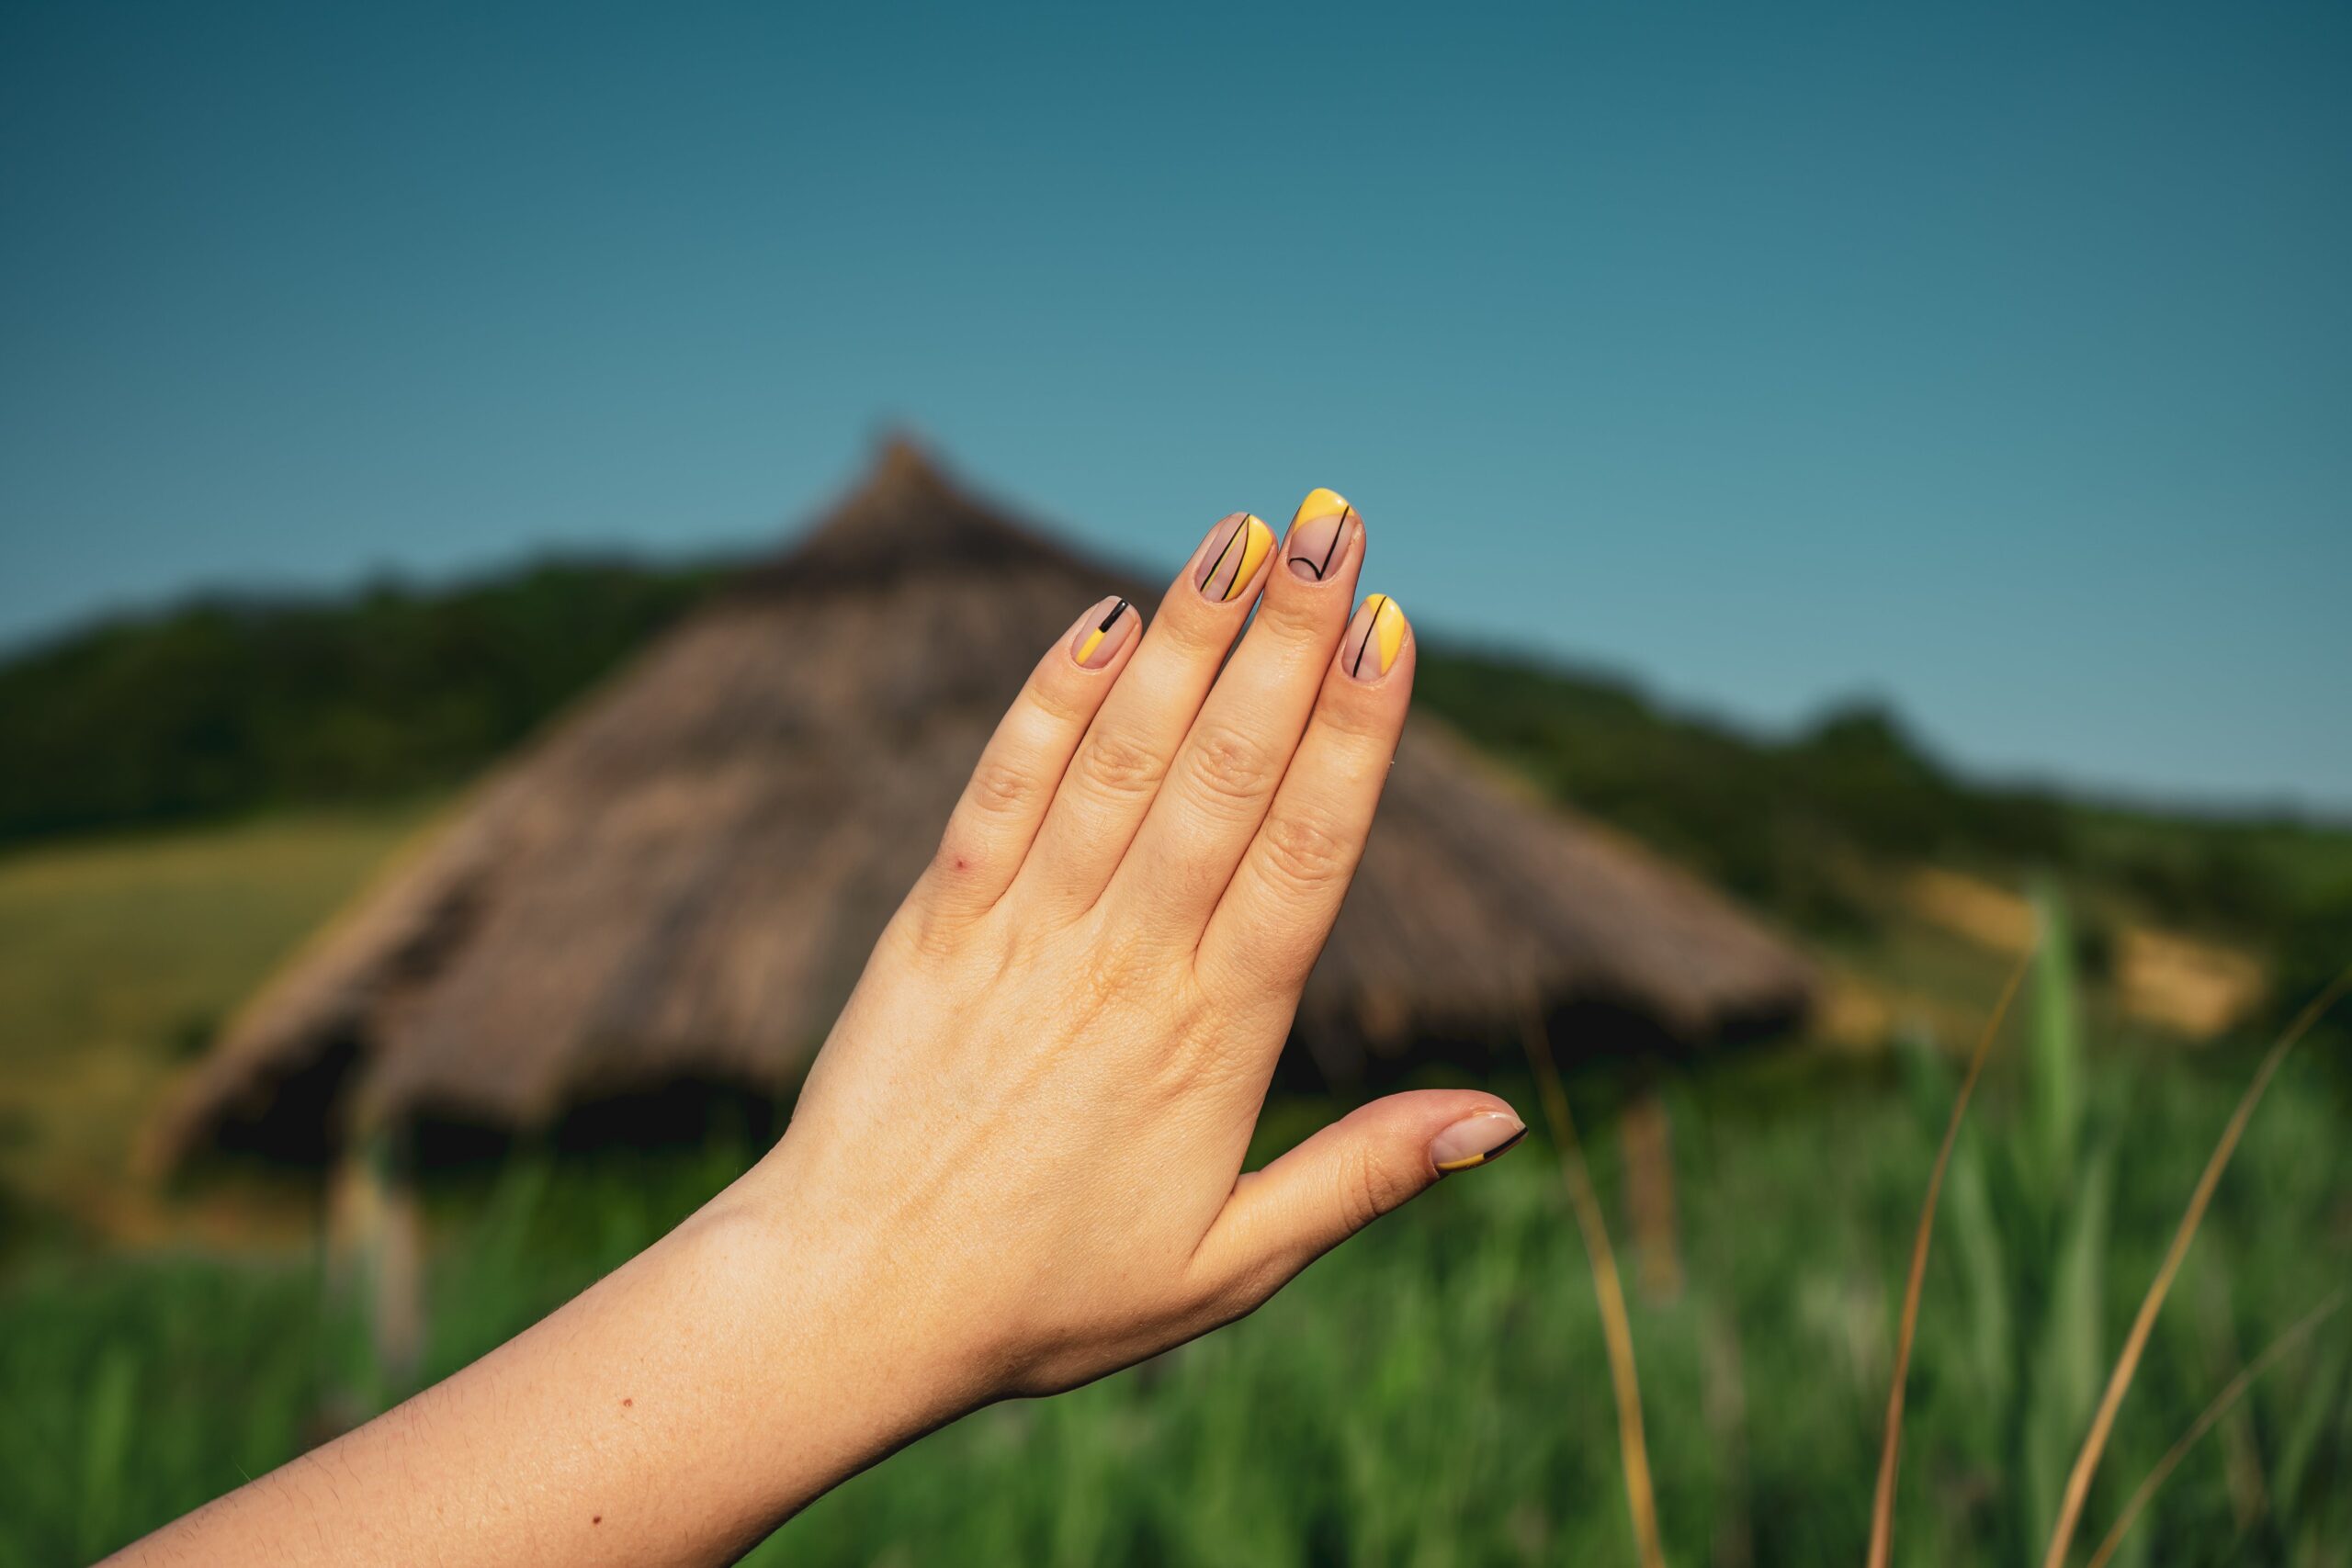 Sådan får du perfekte negle: 10 tips til at opnå flotte og sunde negle